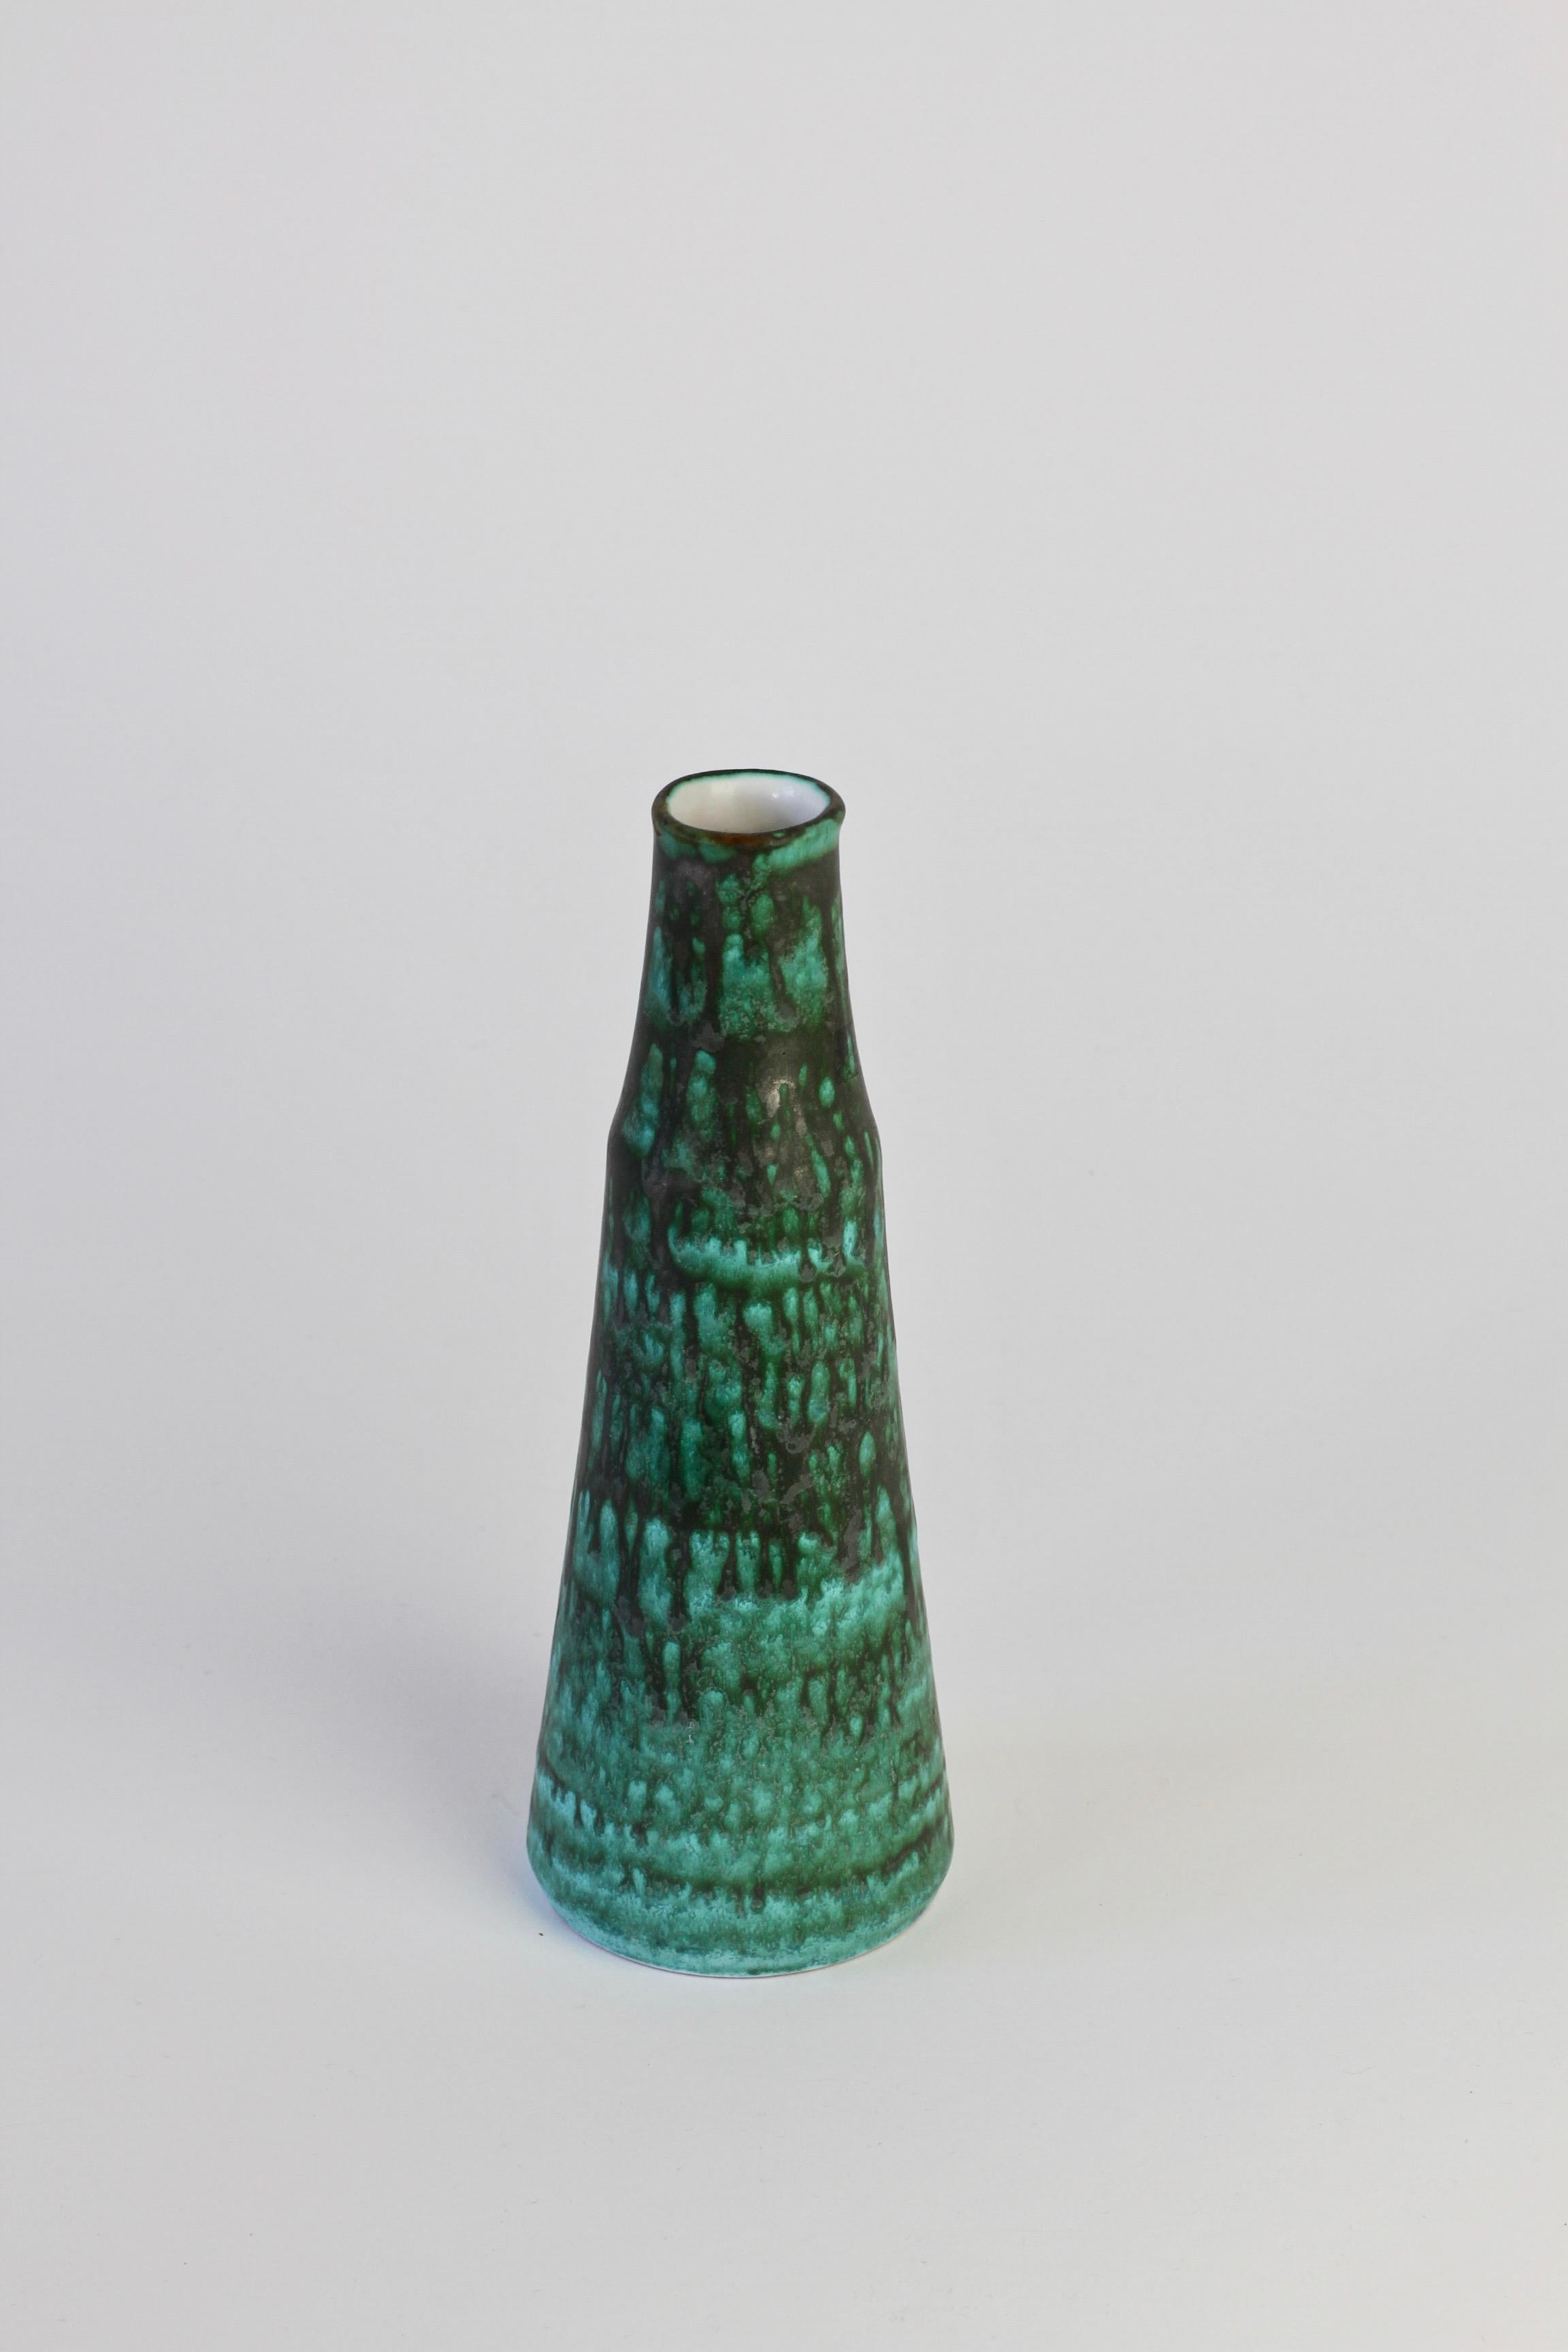 German Vintage Midcentury Green and Graphite Glazed Vase by Waechtersbach, 1950s For Sale